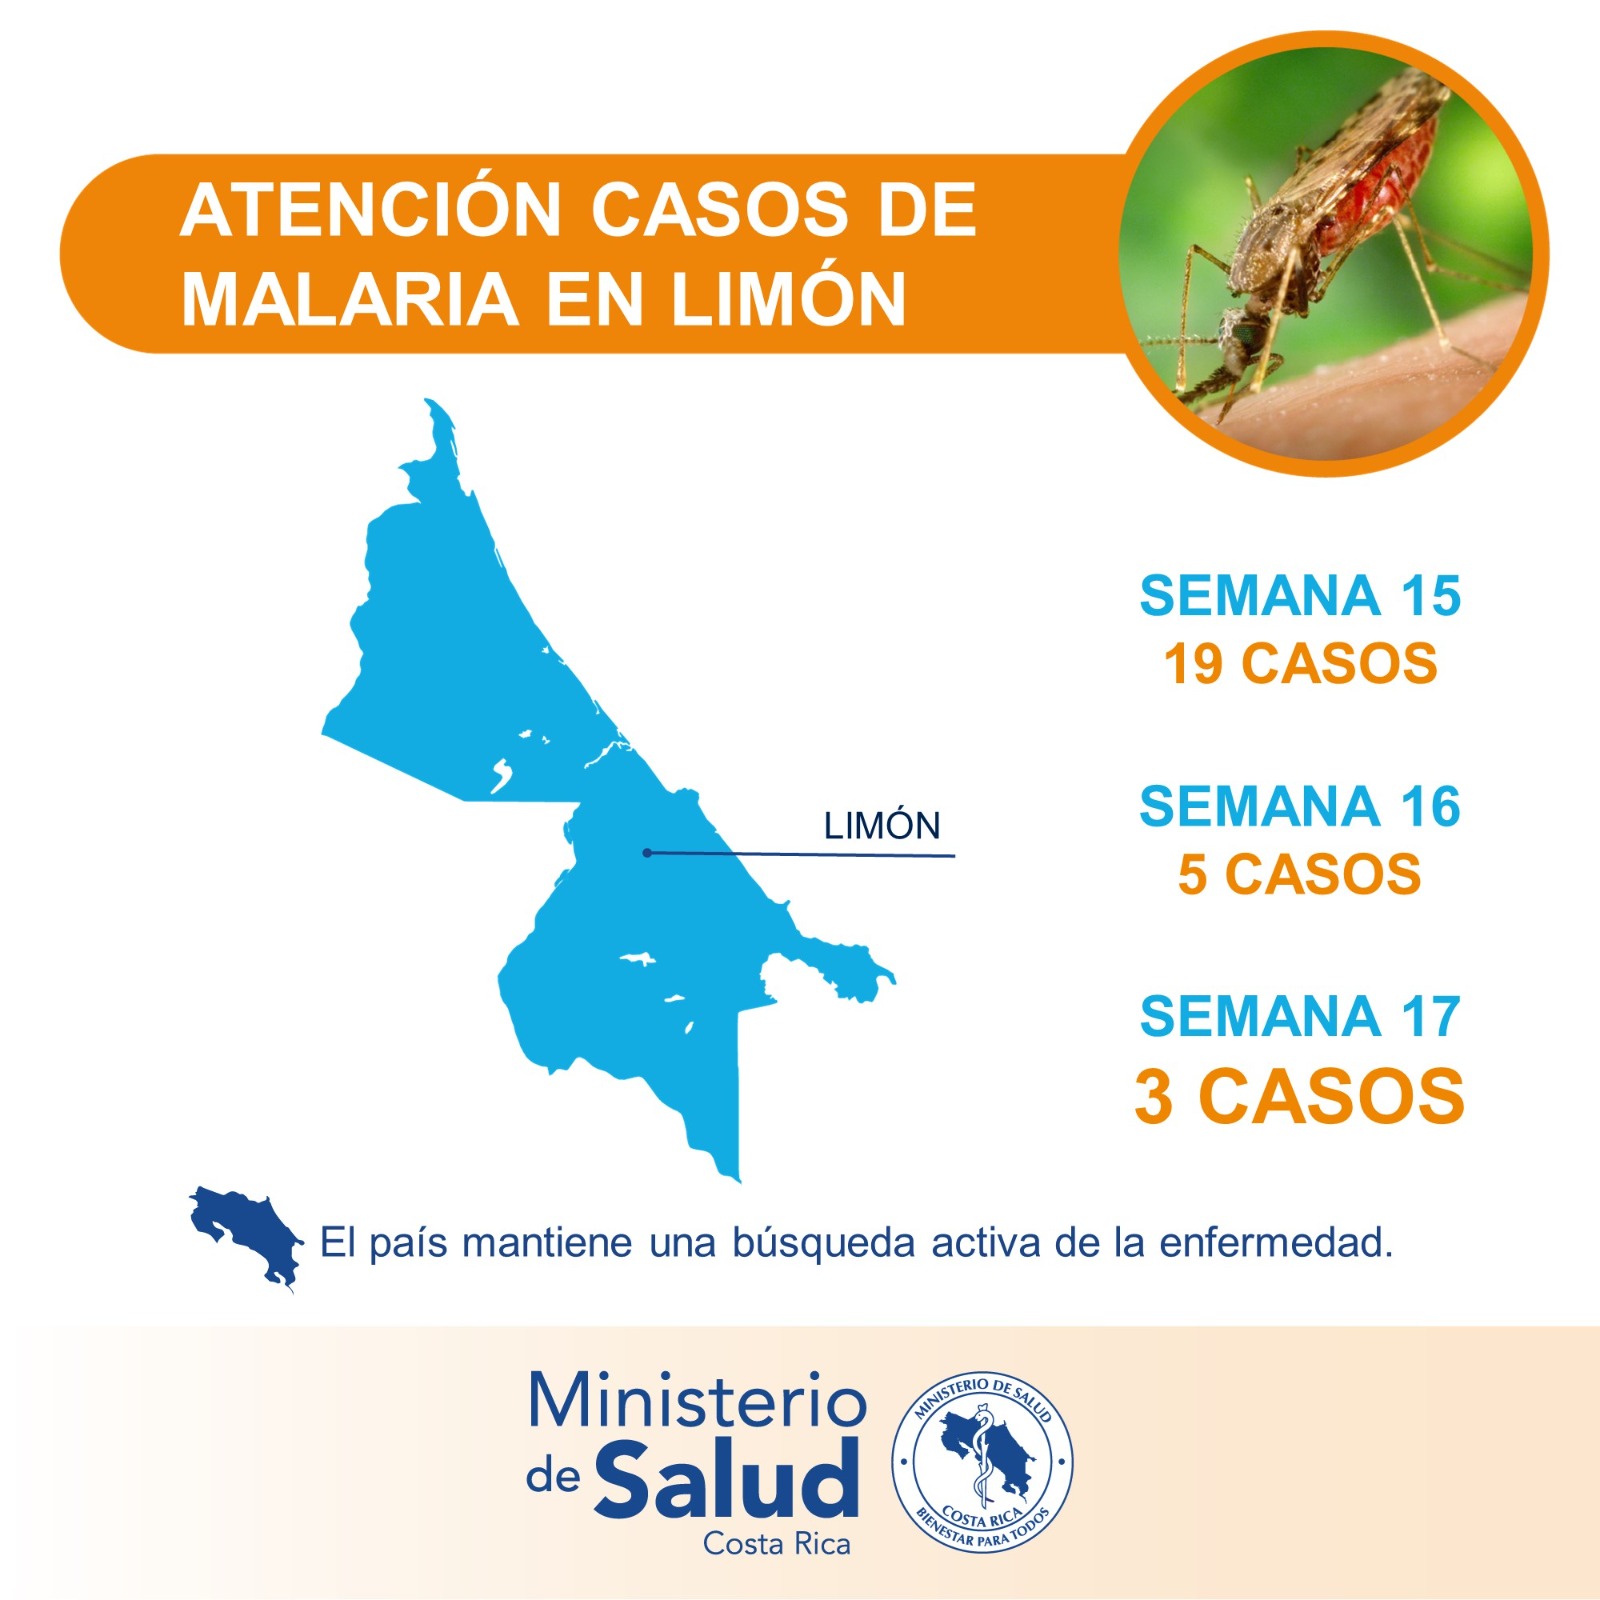 Huetar Caribbean region registers marked decrease in malaria cases